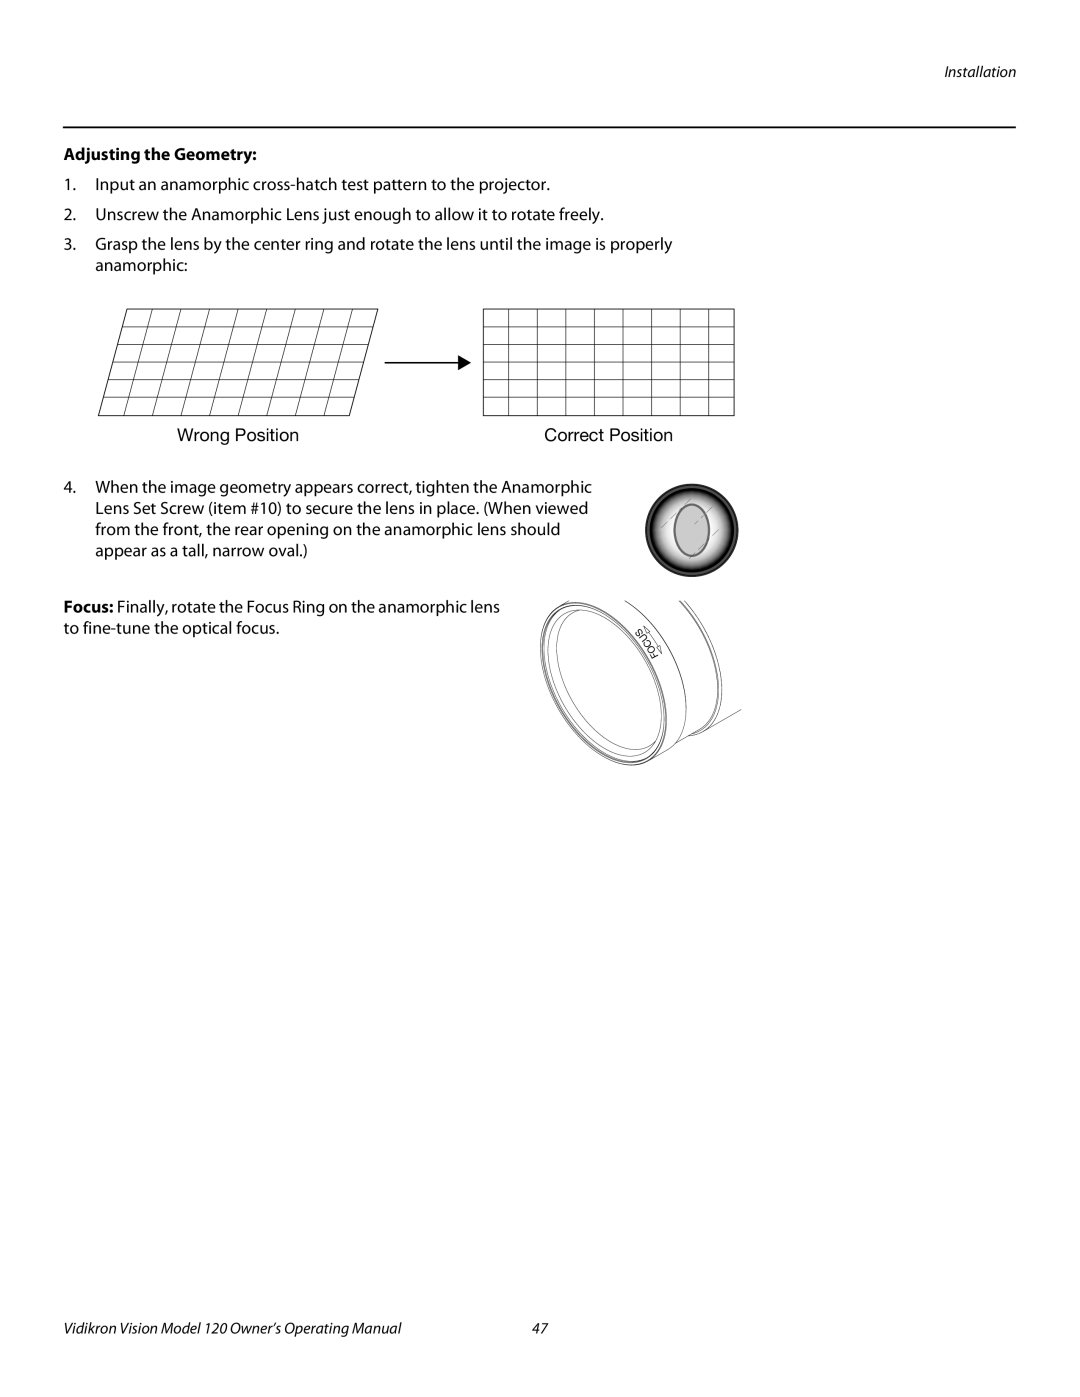 Vidikron v120 manual Adjusting the Geometry 